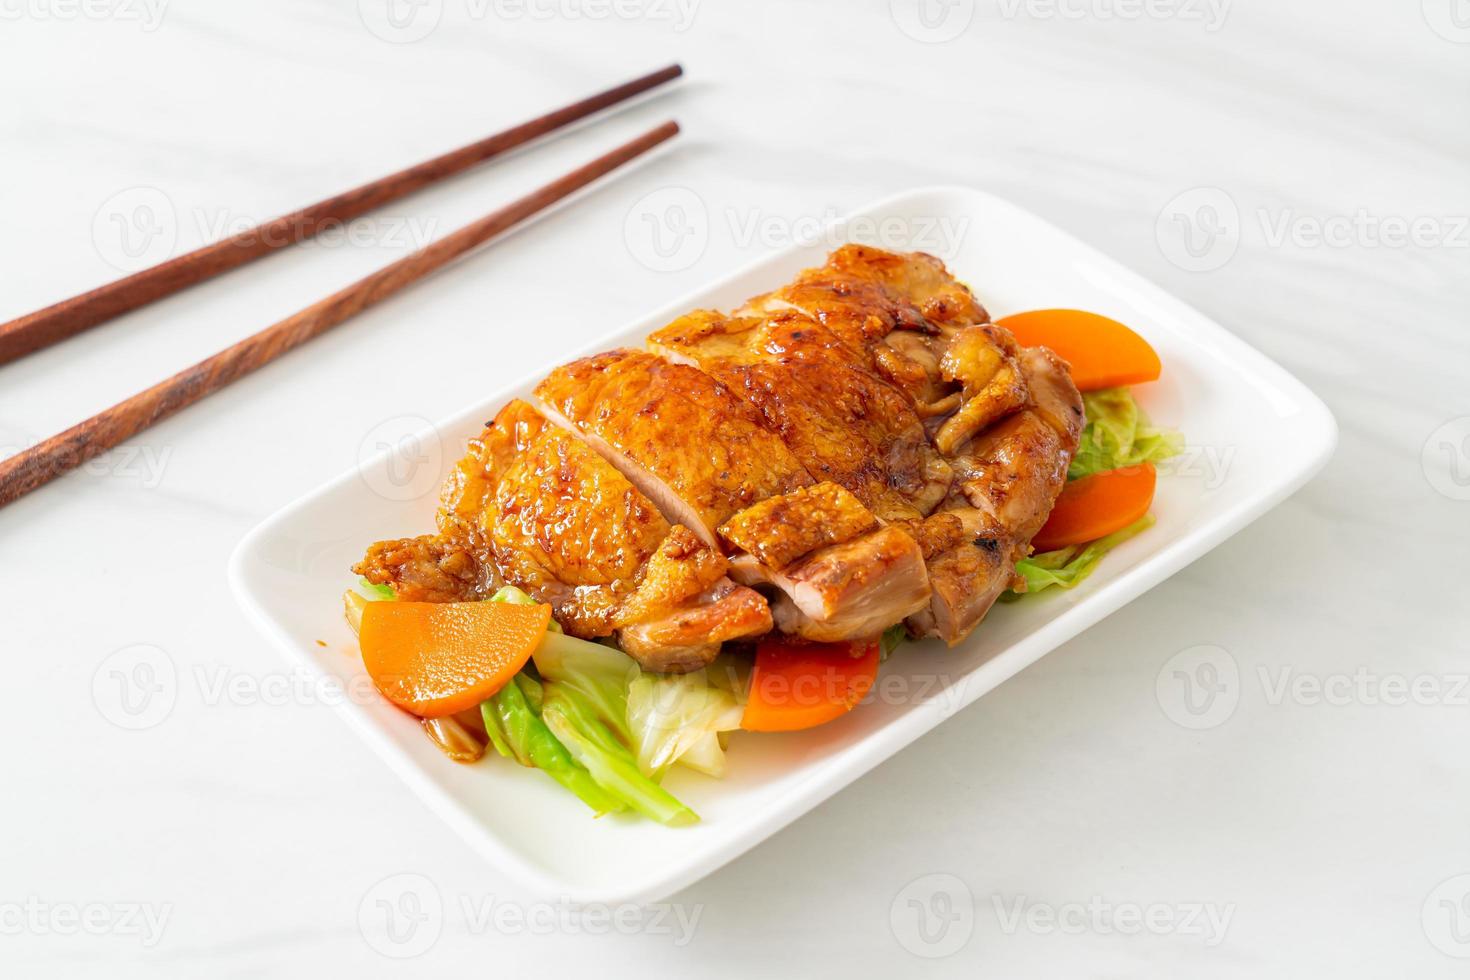 bife de frango teriyaki teppanyaki com repolho e cenoura foto